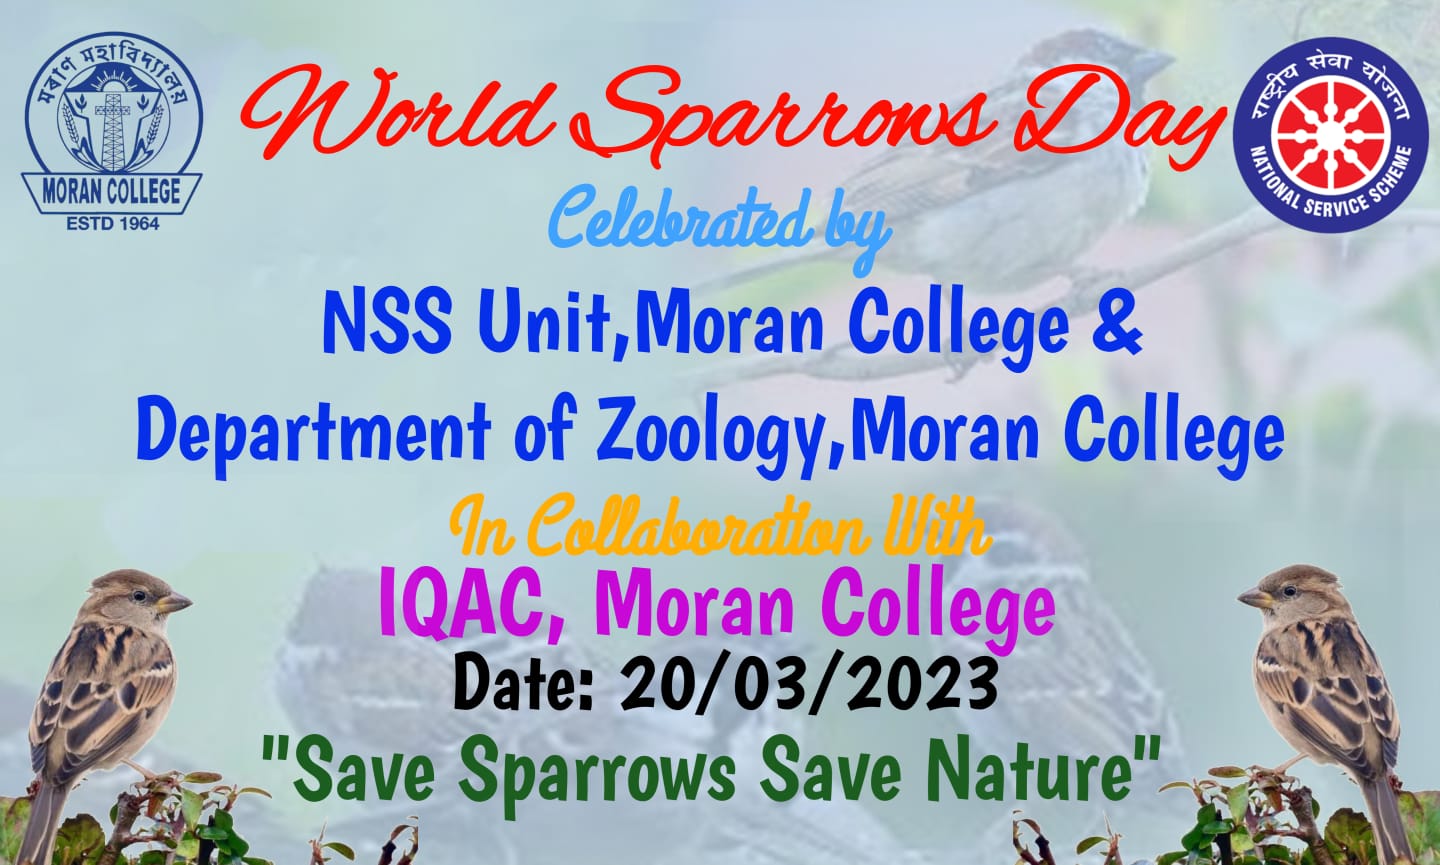 World Sparrows Day Celebration (Date- 20/03/2023)